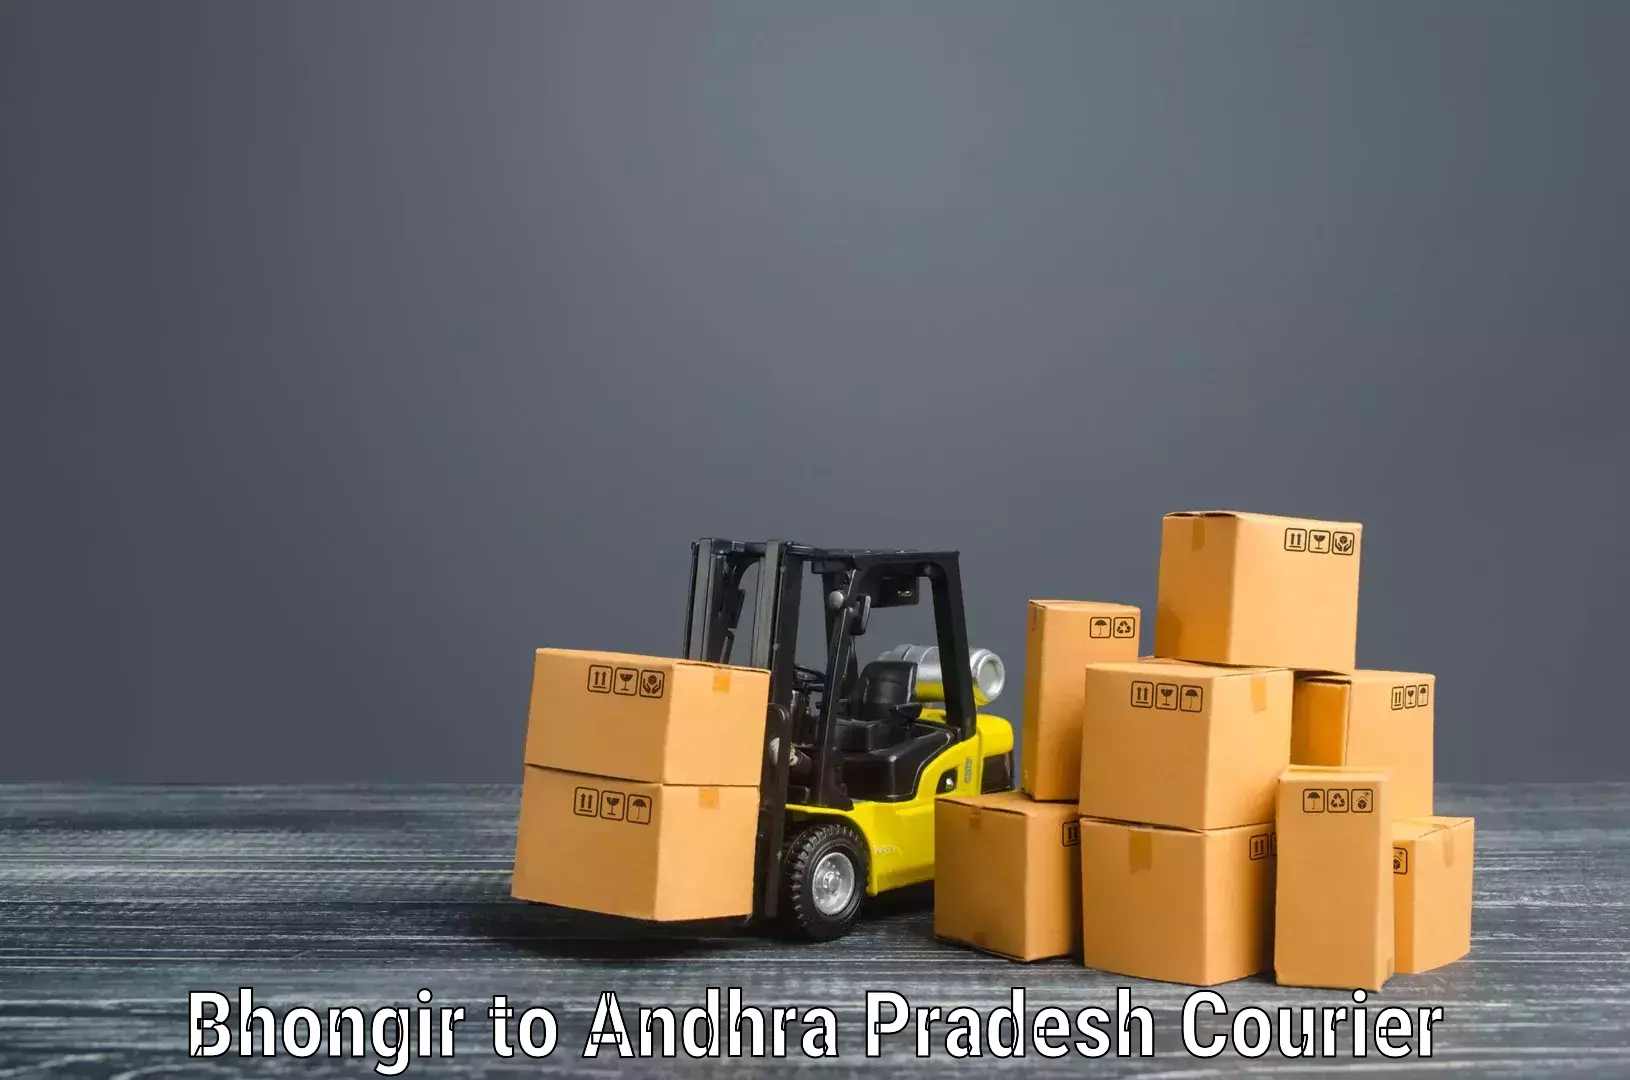 Furniture delivery service Bhongir to Tada Tirupati